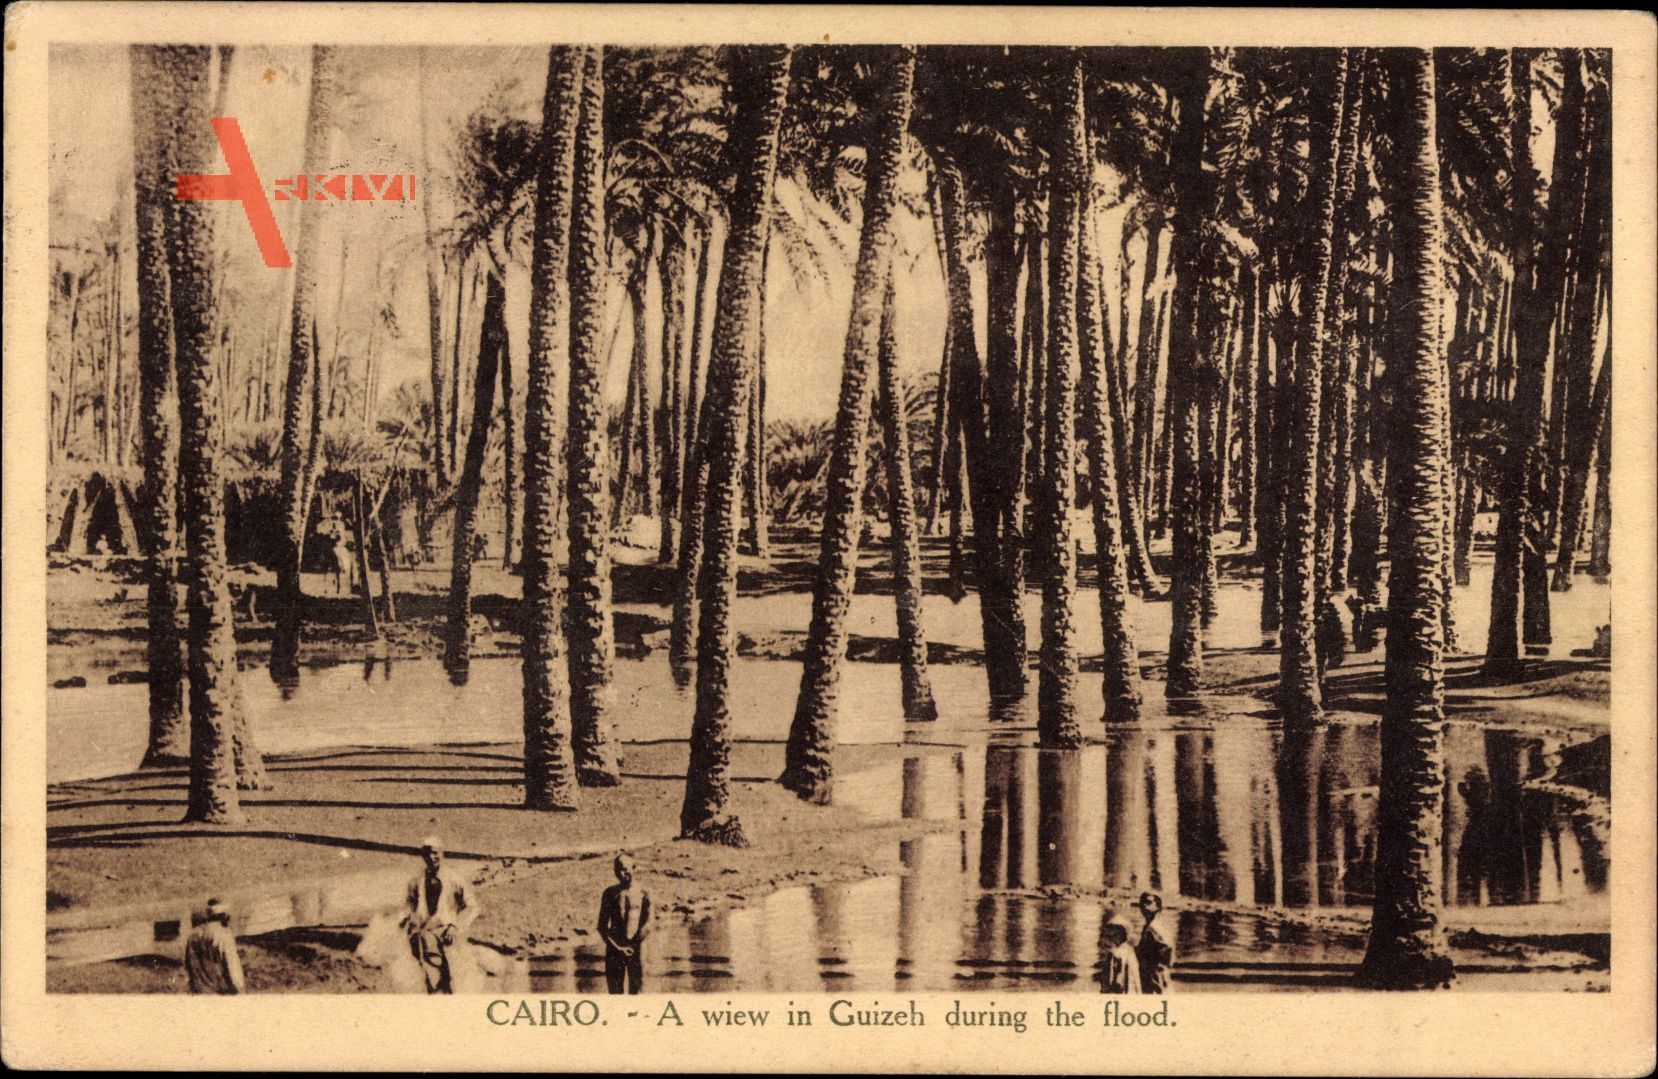 Cairo Kairo Ägypten, A view in Guizeh during the flood, Nilhochwasser